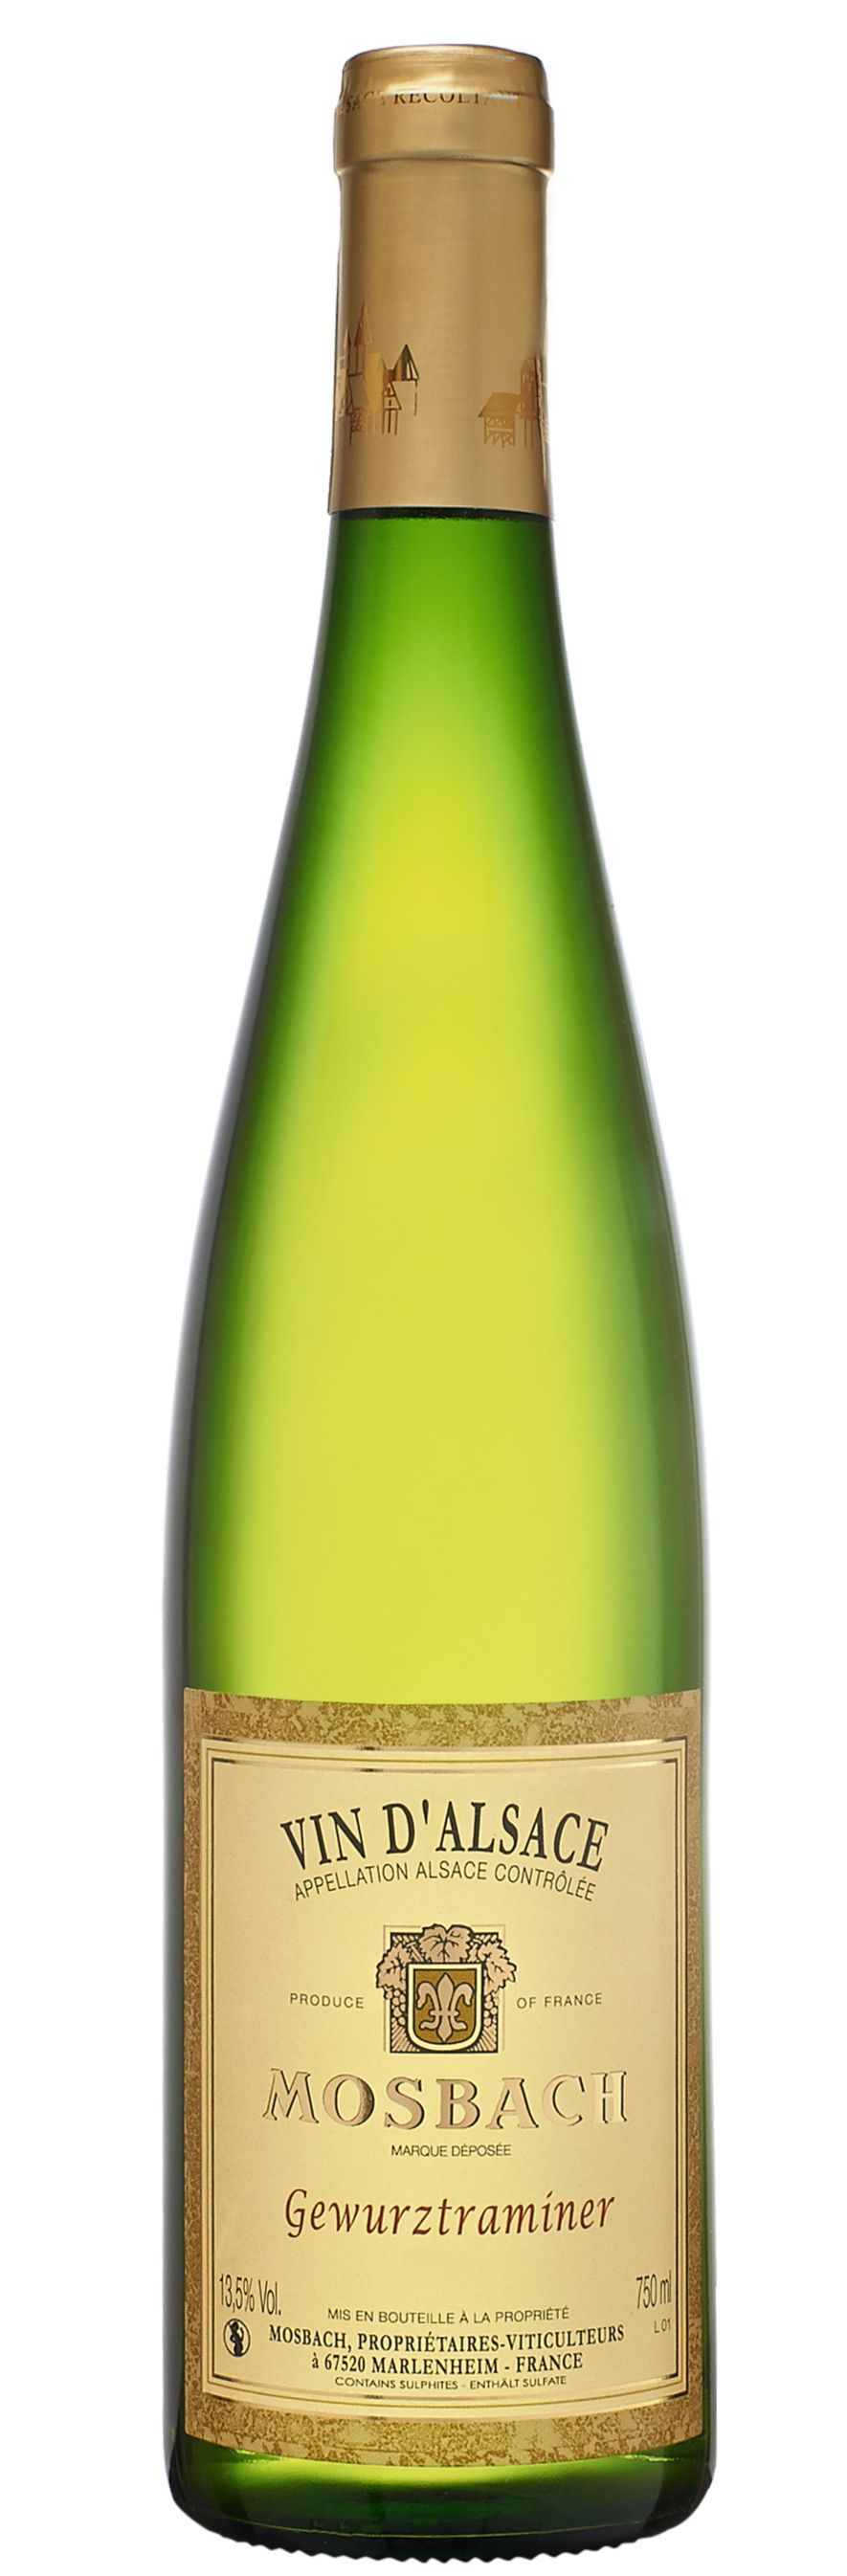 GFA MOSBACH (MARLENHEIM) Gewurztraminer Mosbach, Bianco, 2020, Alsace ou Vin d'Alsace. Bottle image